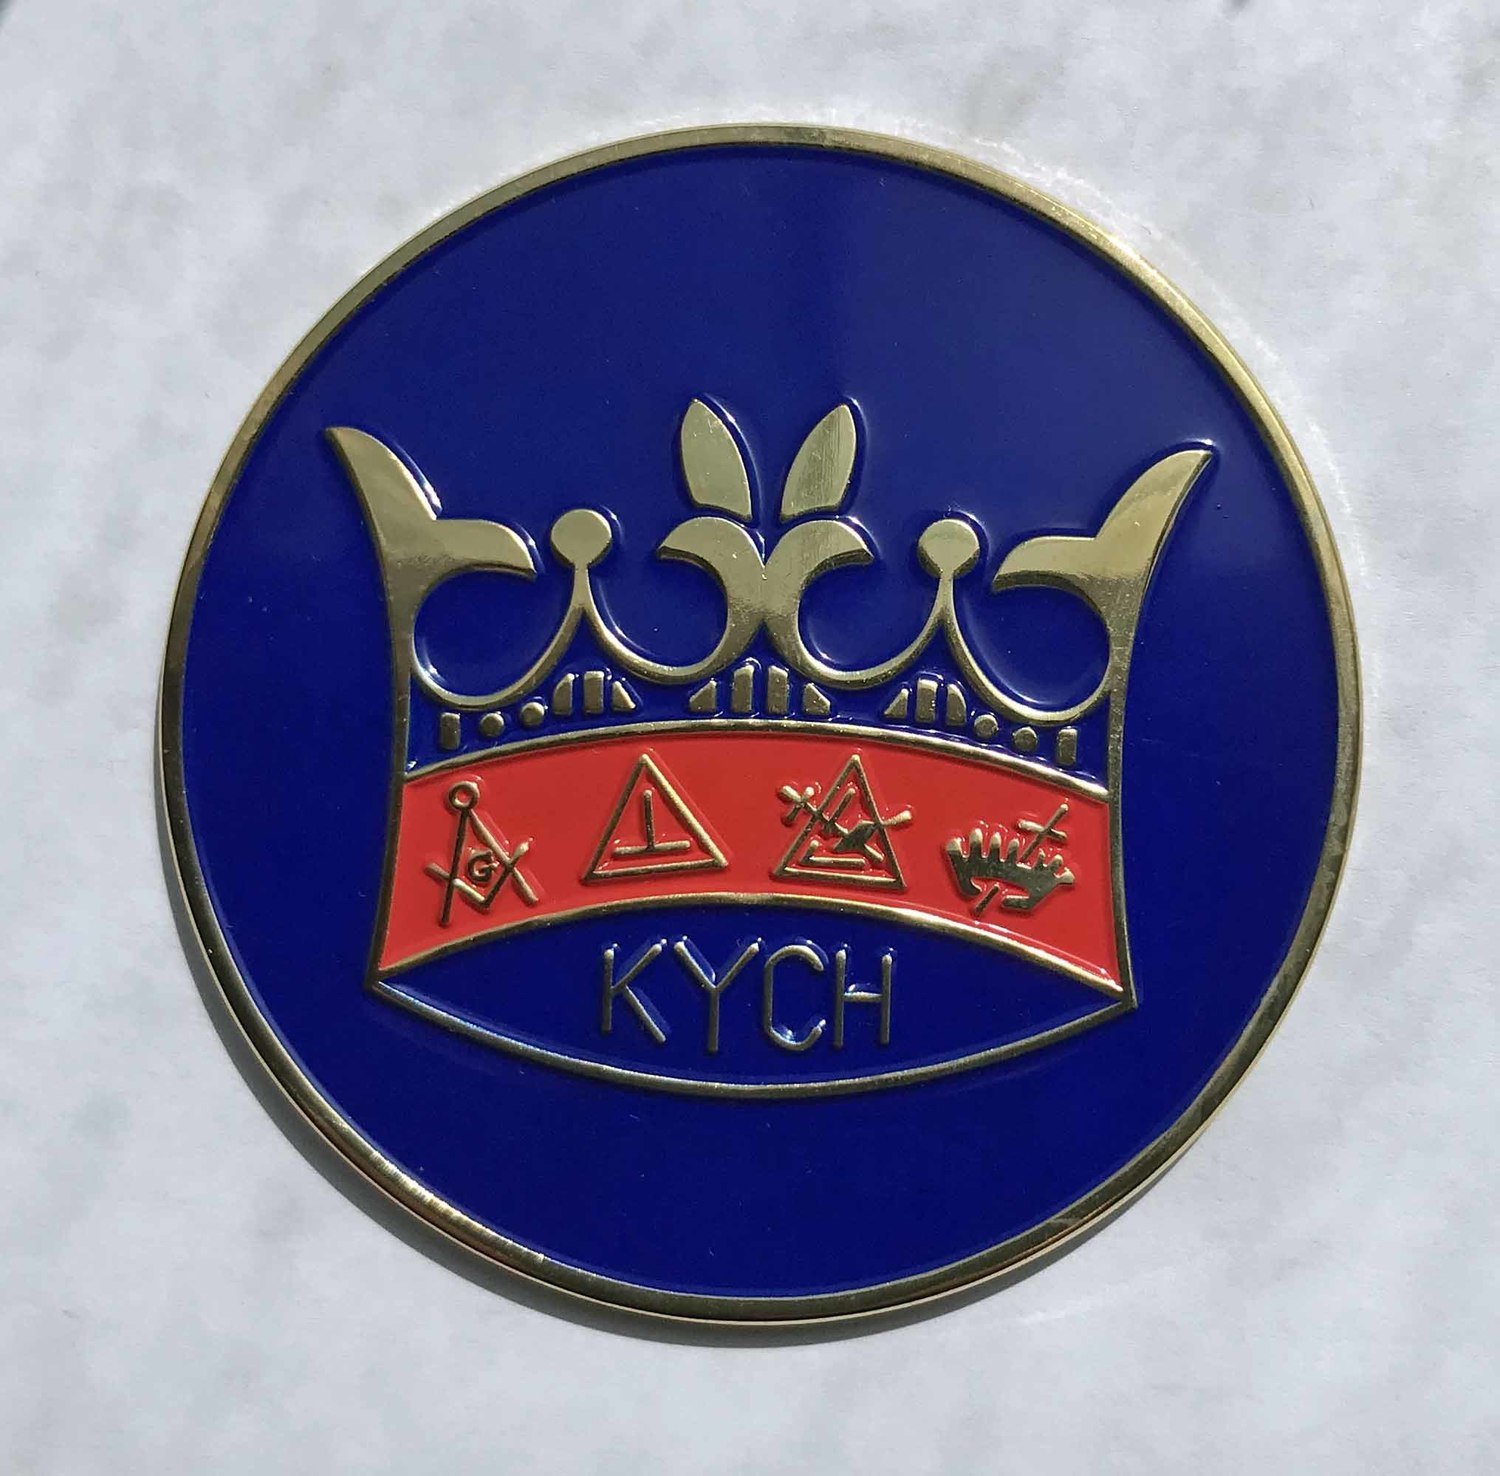 Car Emblem, KYCH plastic car emblem (peel off back)